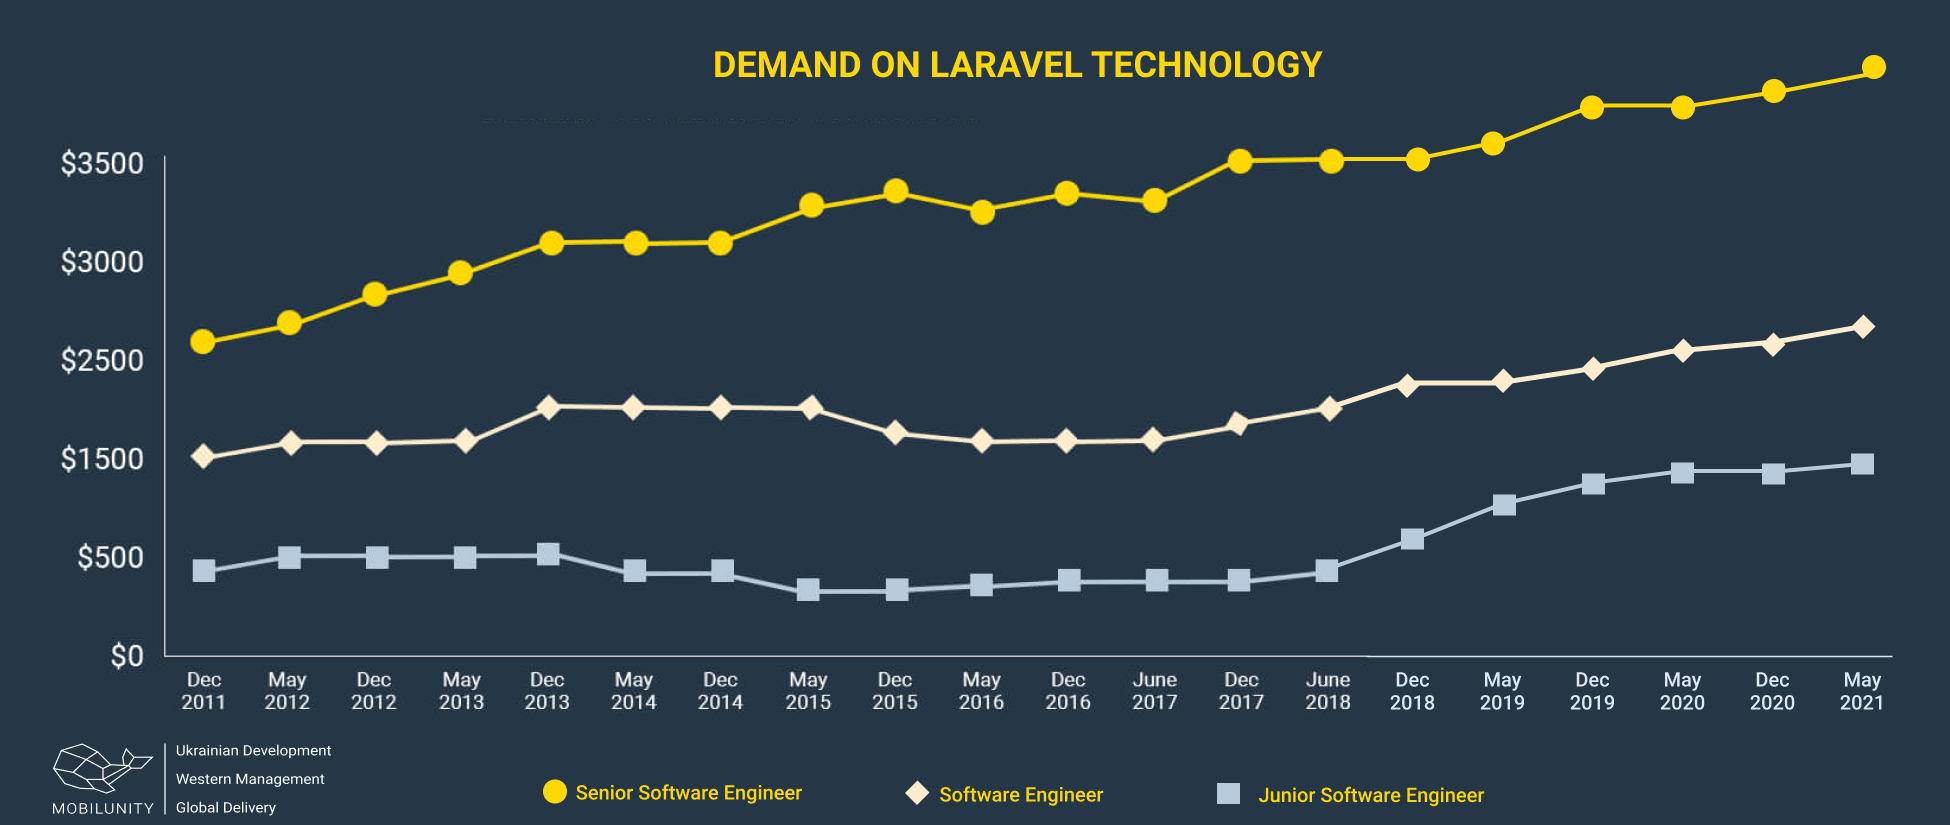 demand on laravel technology years